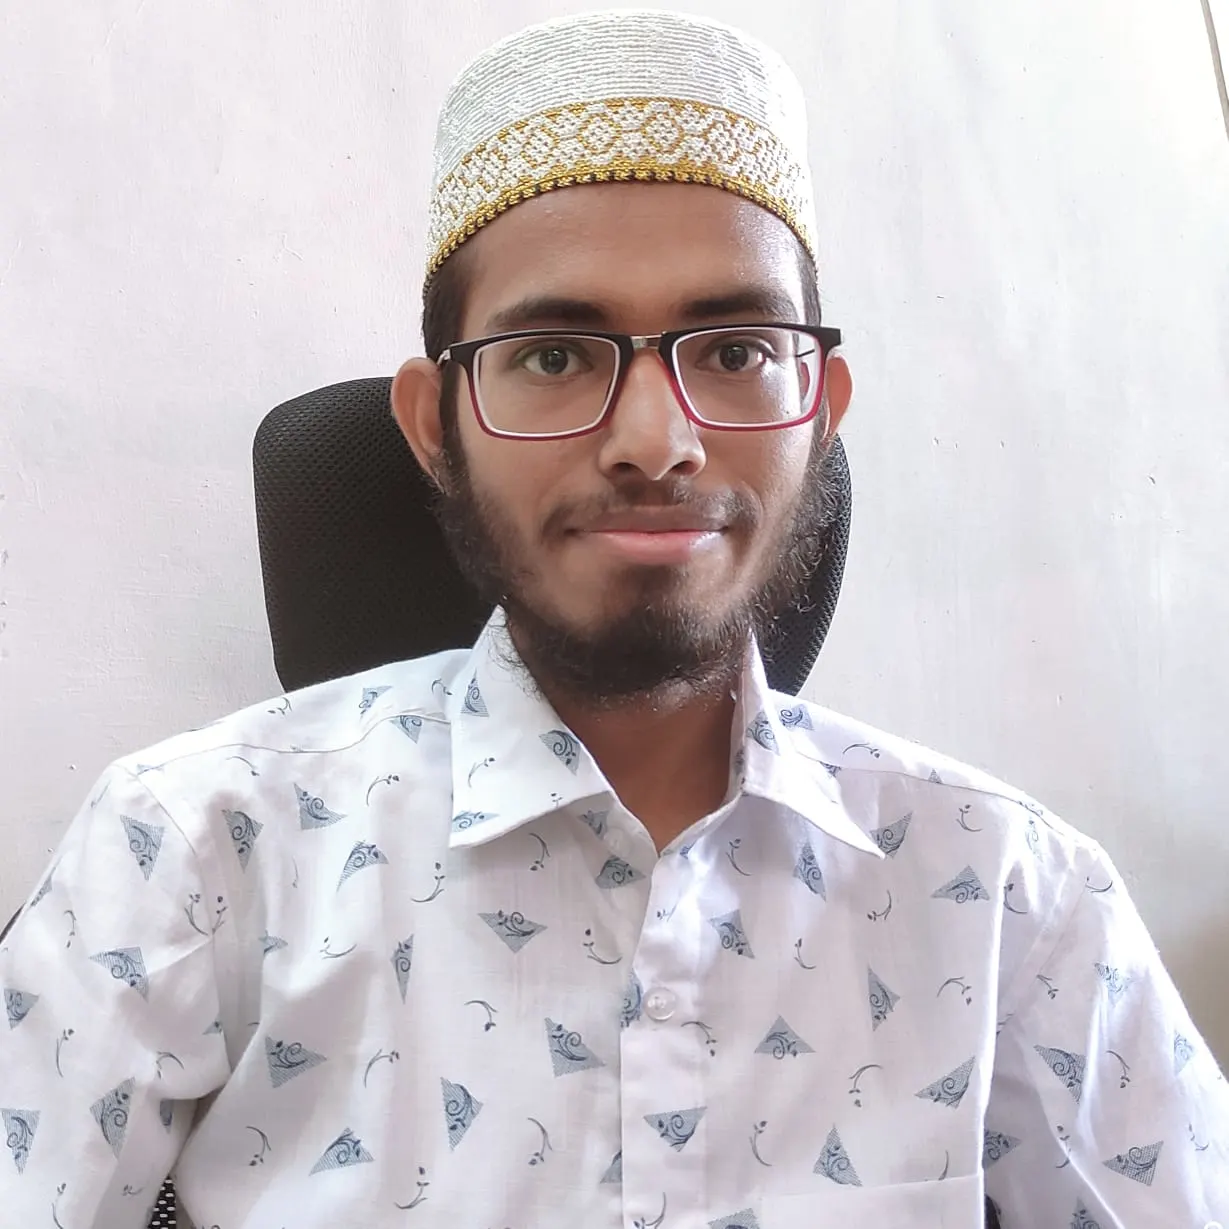 Hakimuddin Sohangpurwala's avatar